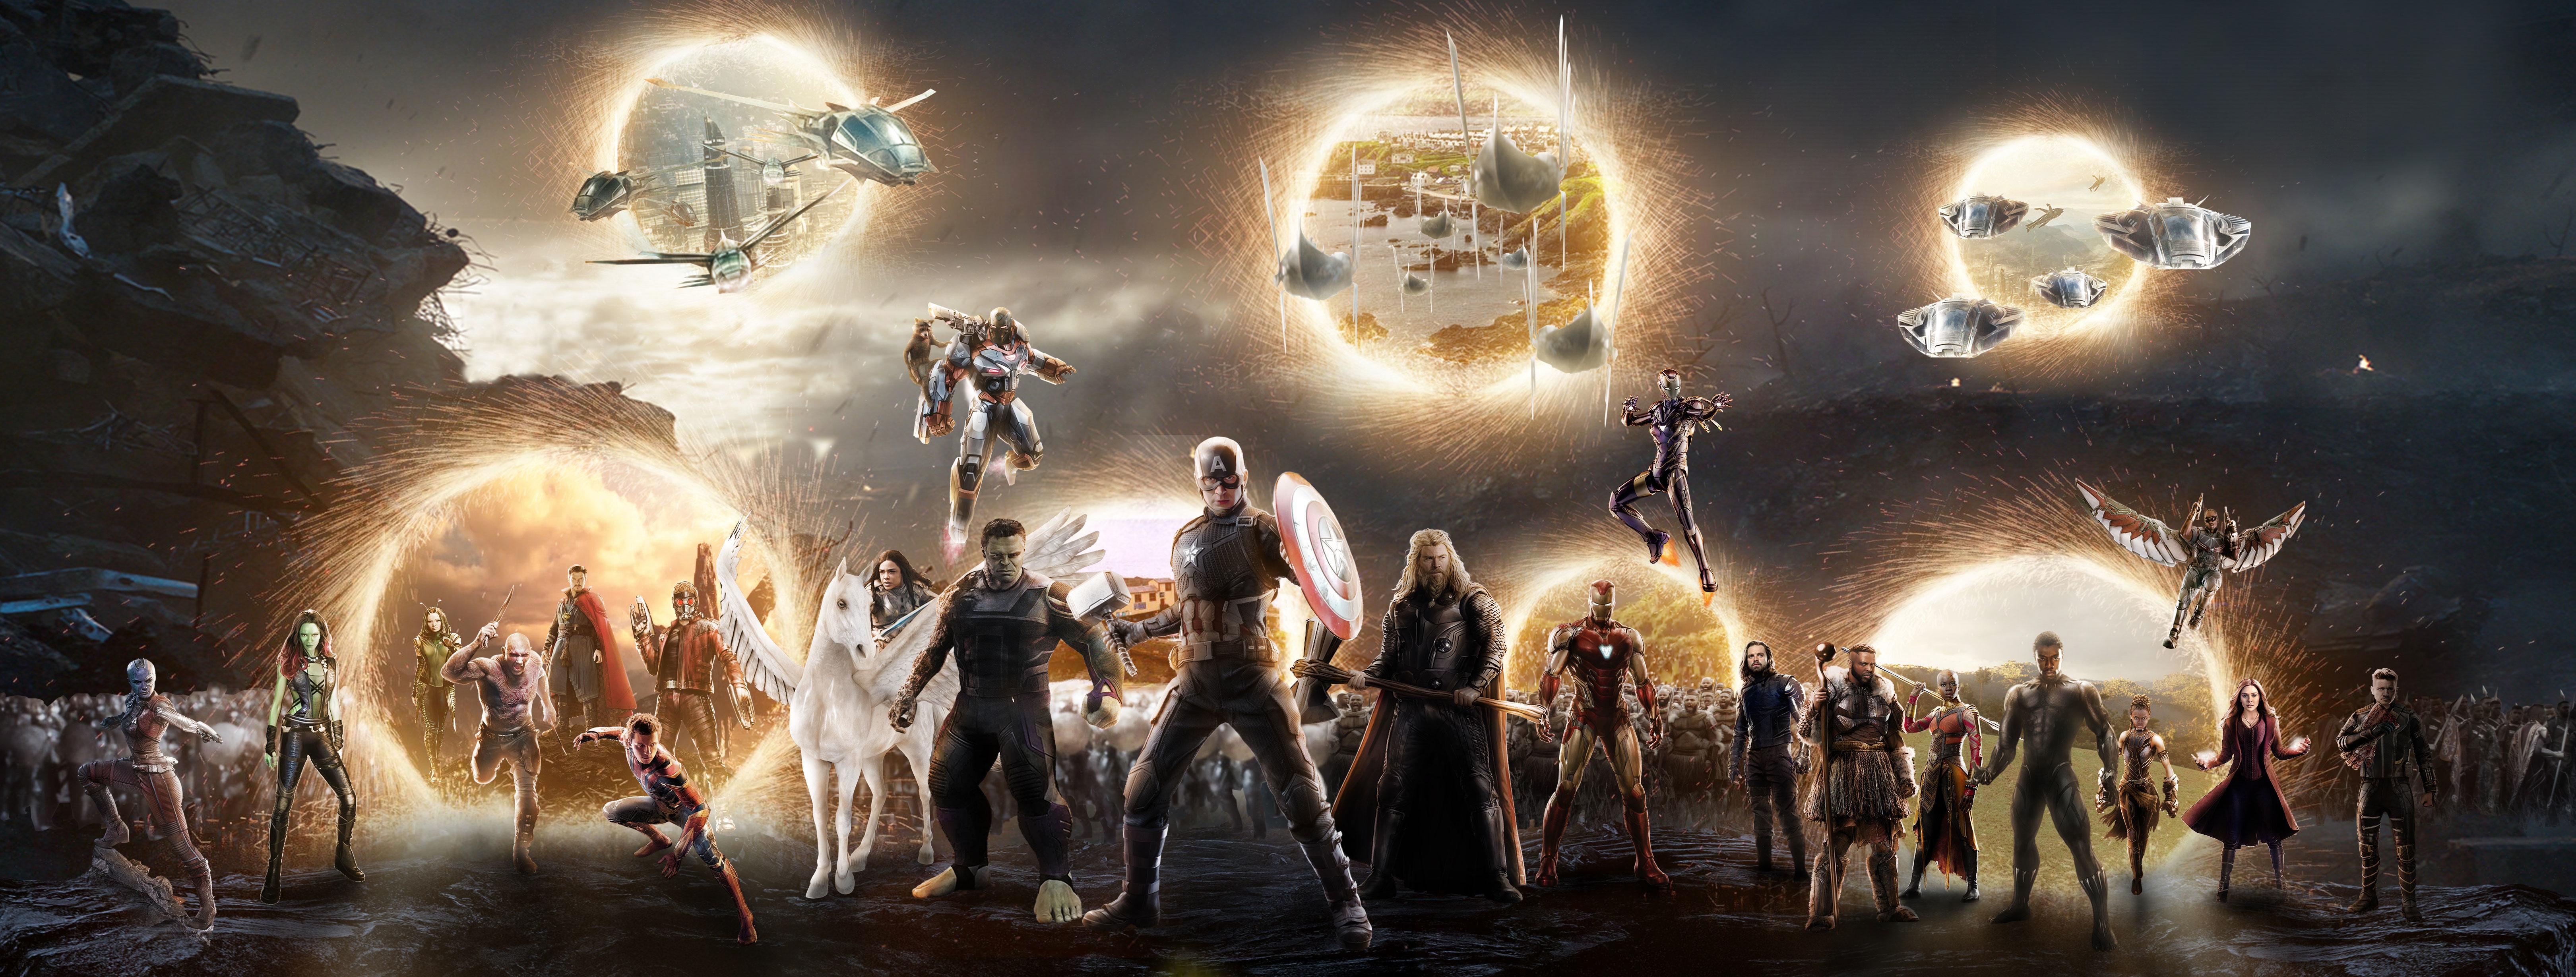 Avengers Assemble Wallpaper, HD Movies 4K Wallpaper, Image